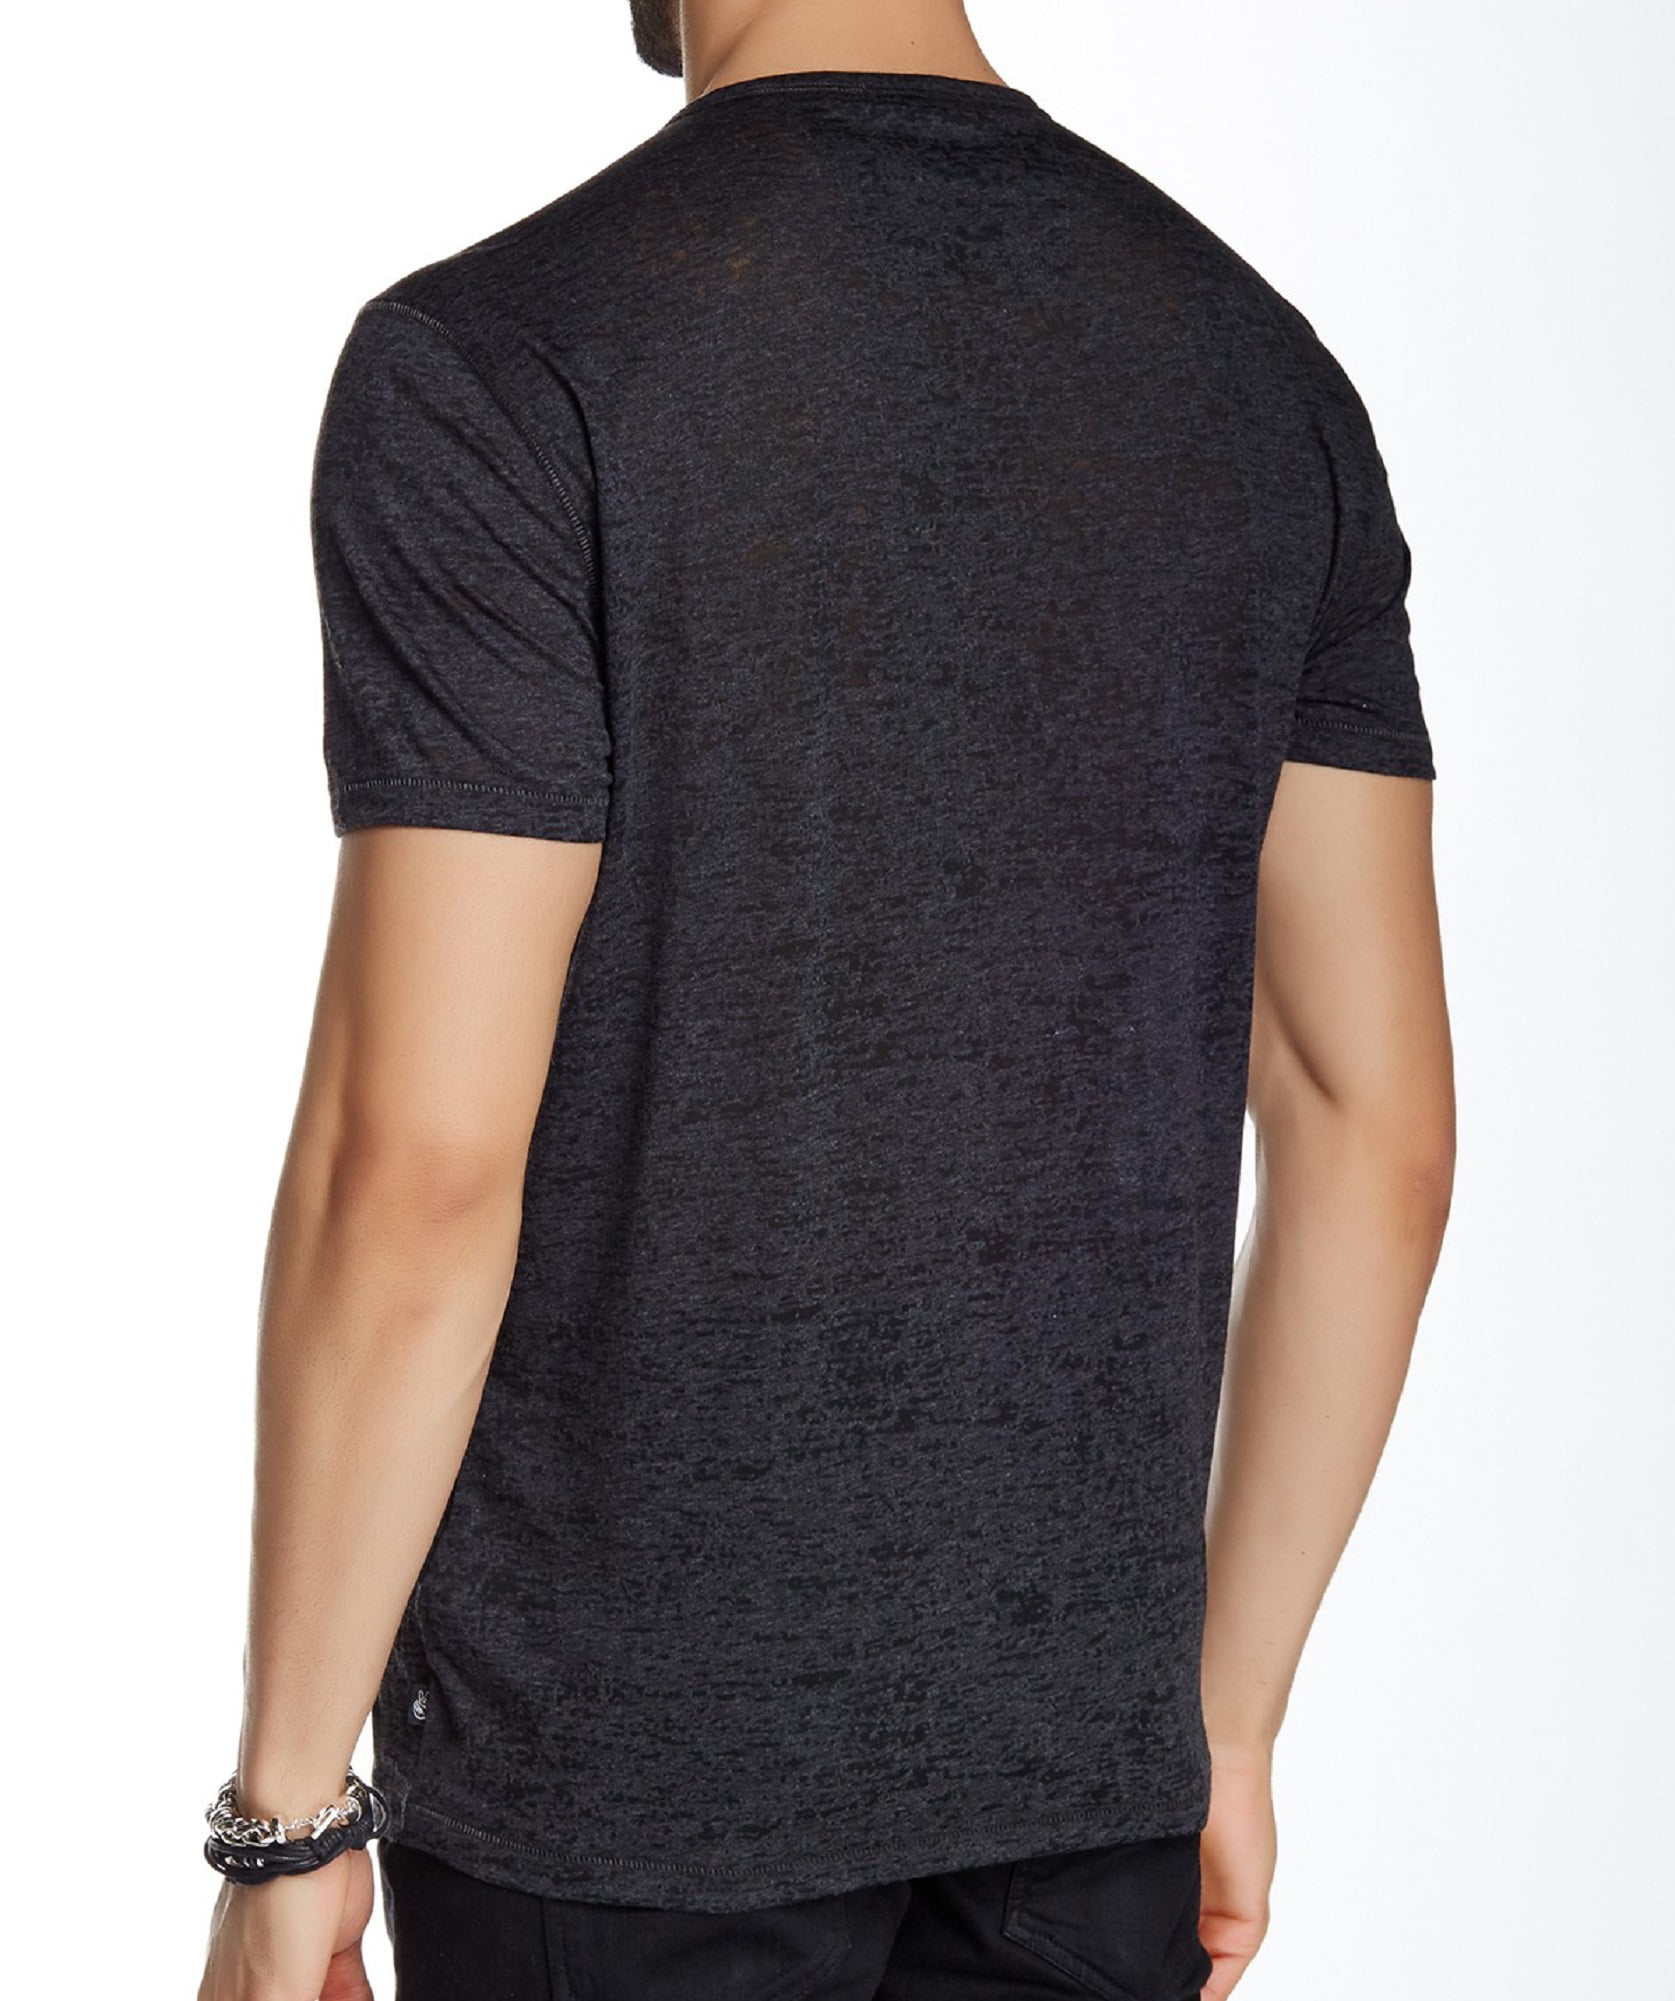 Details about   John Varvatos Star USA Men's Short Sleeve Pocket Crew T-Shirt Neppy Dry Lavender